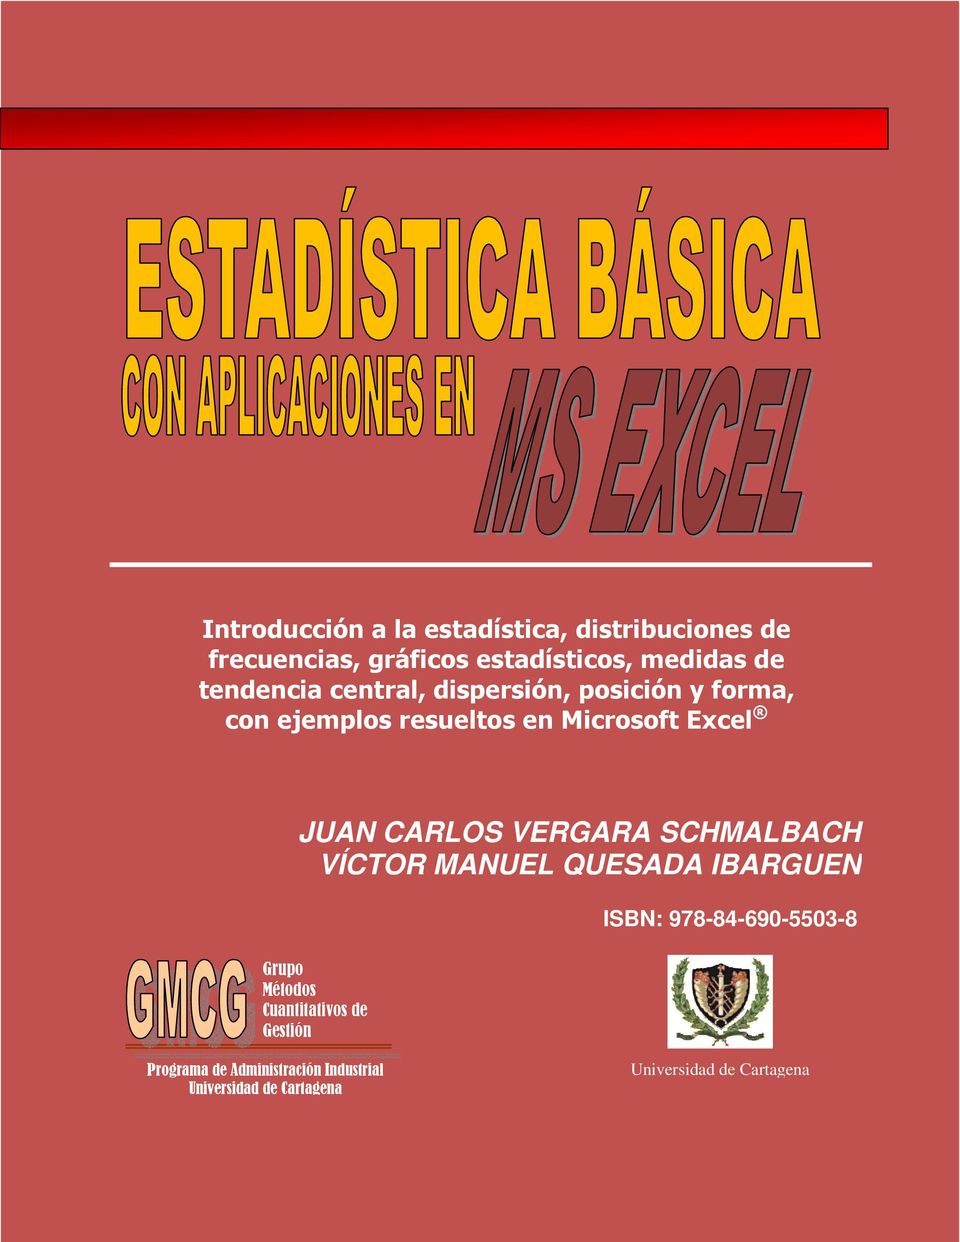 CARLOS VERGARA SCHMALBACH VÍCTOR MANUEL QUESADA IBARGUEN ISBN: 978-84-690-5503-8 Grupo